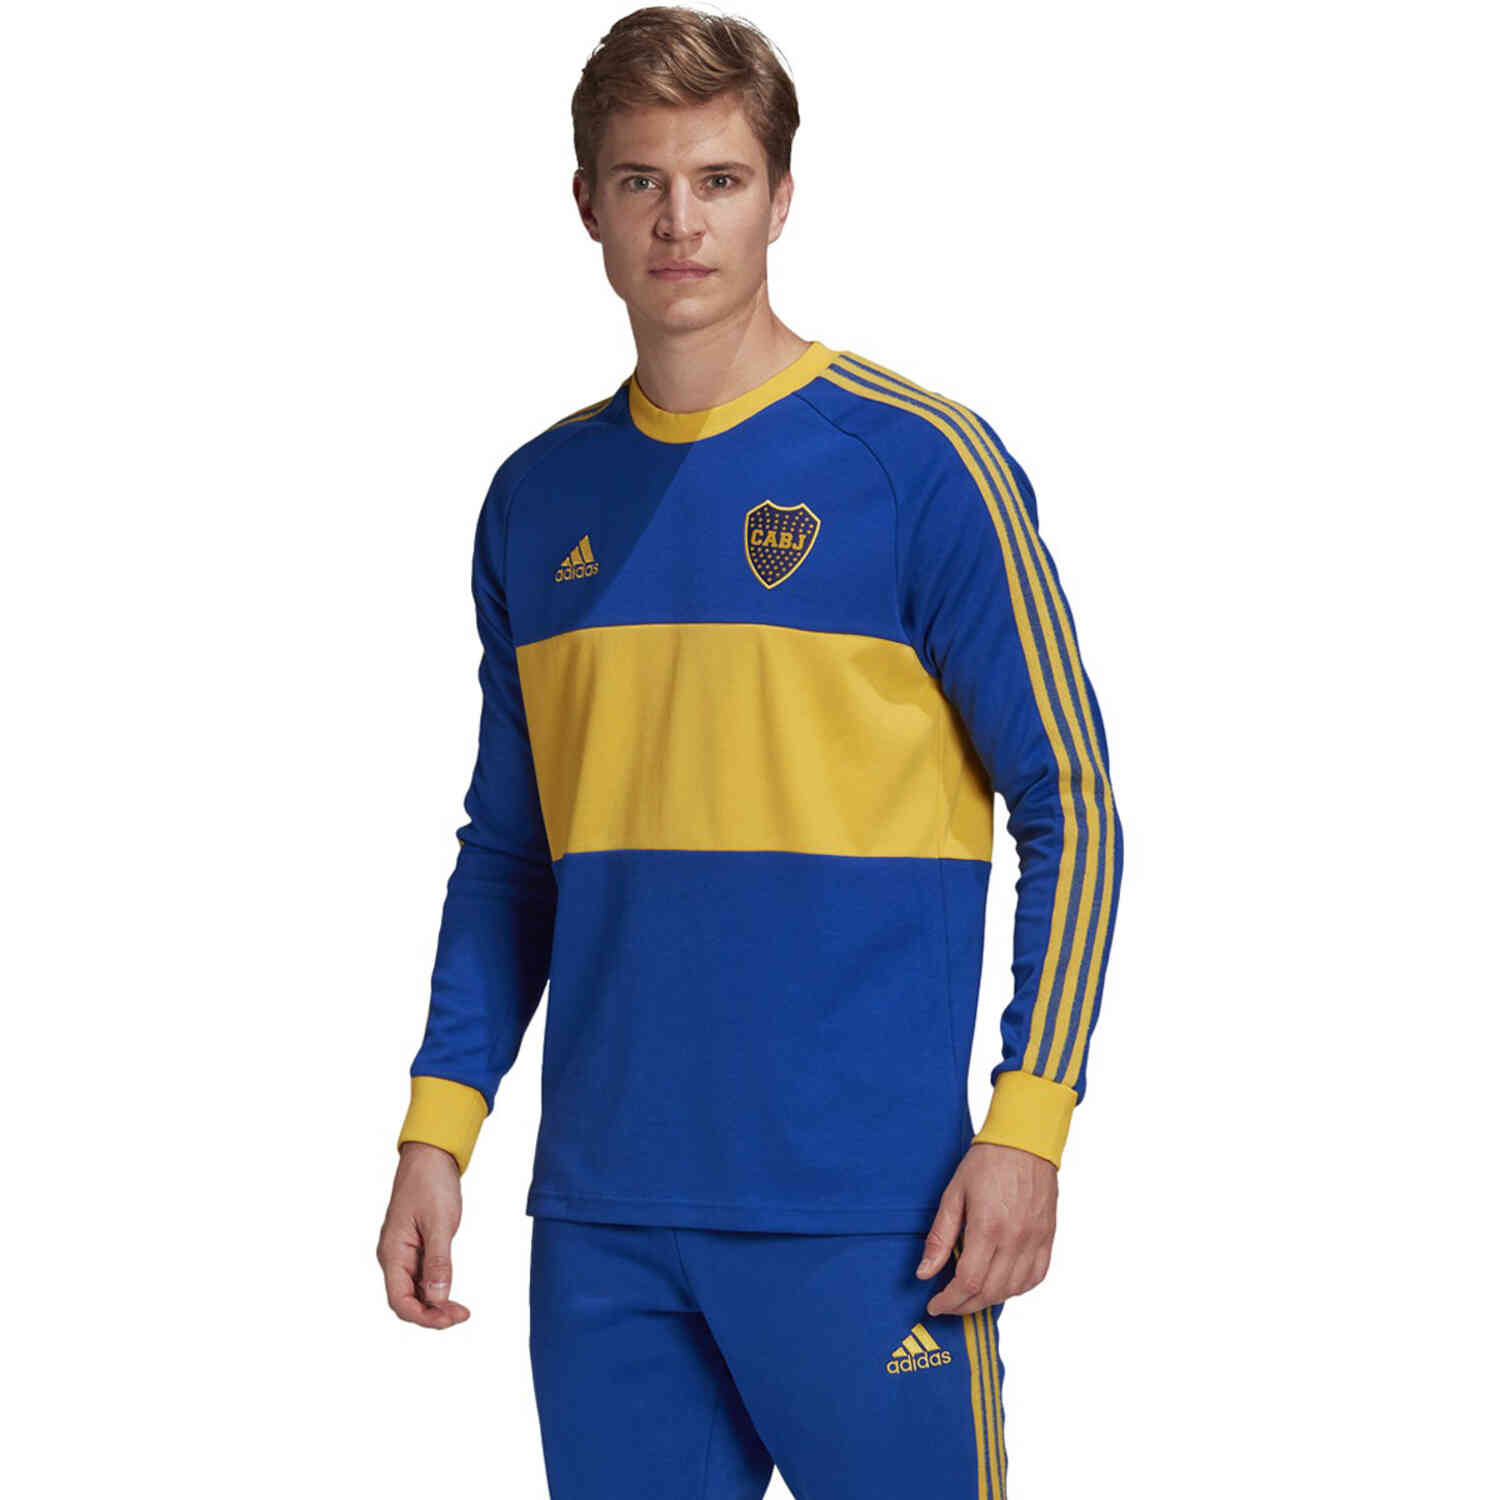 Adidas Boca Juniors Retro Jersey for Sale in Aventura, FL - OfferUp